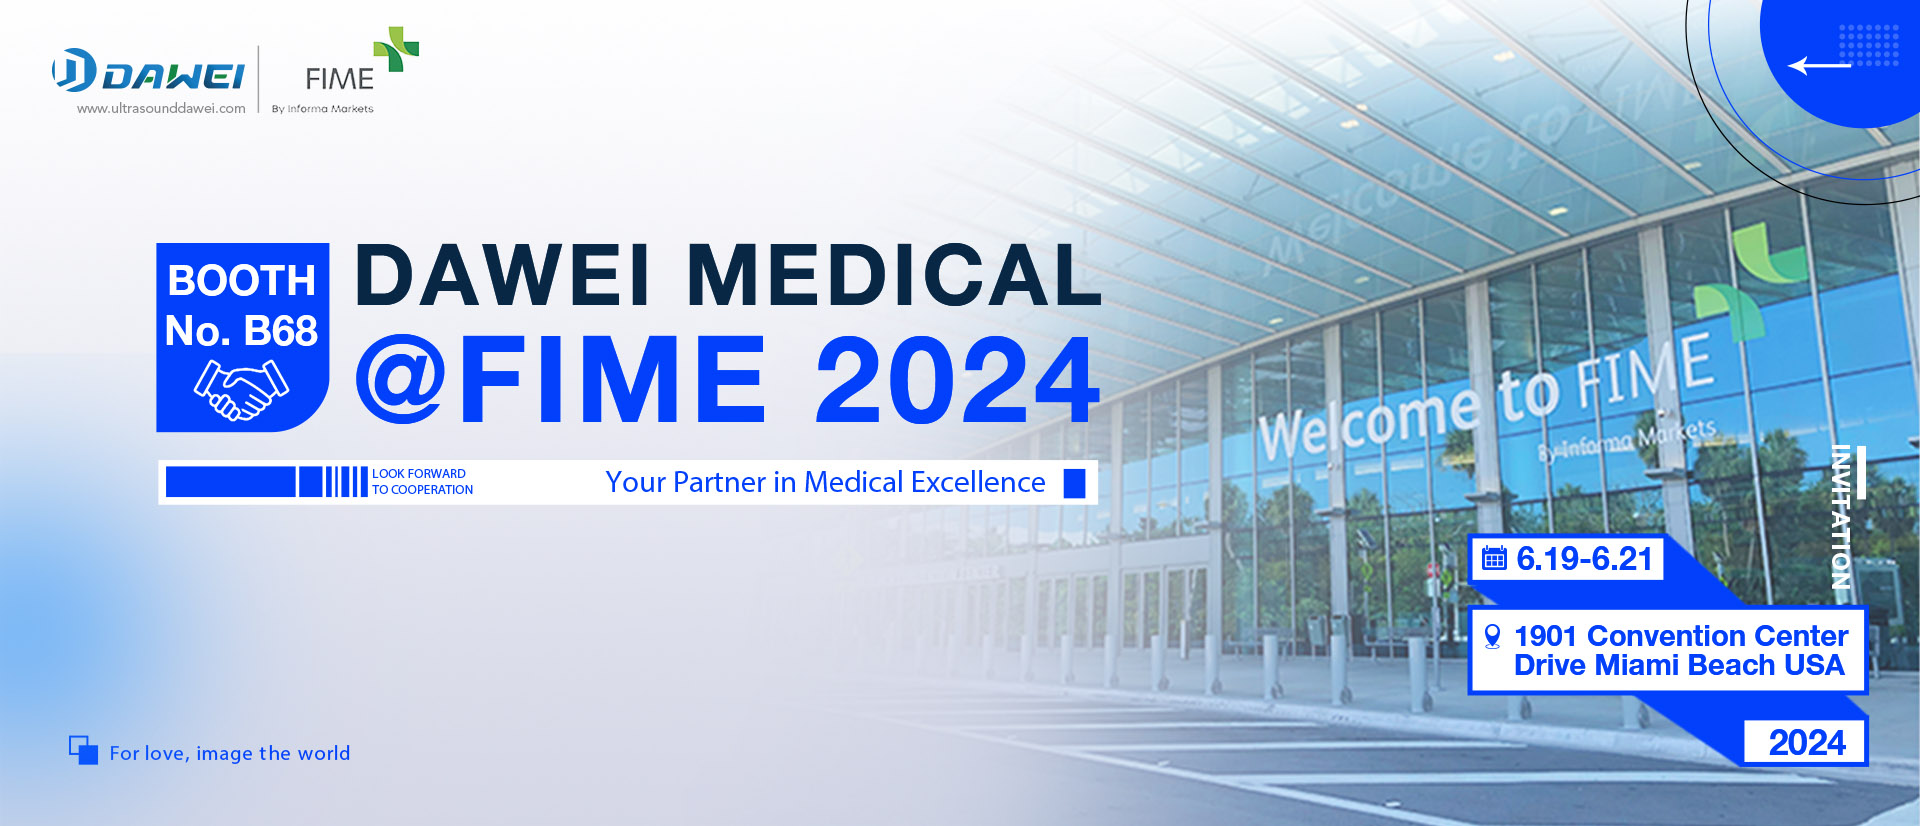 Dawei Medical: Florida International Medical Expo (FIME) 2024